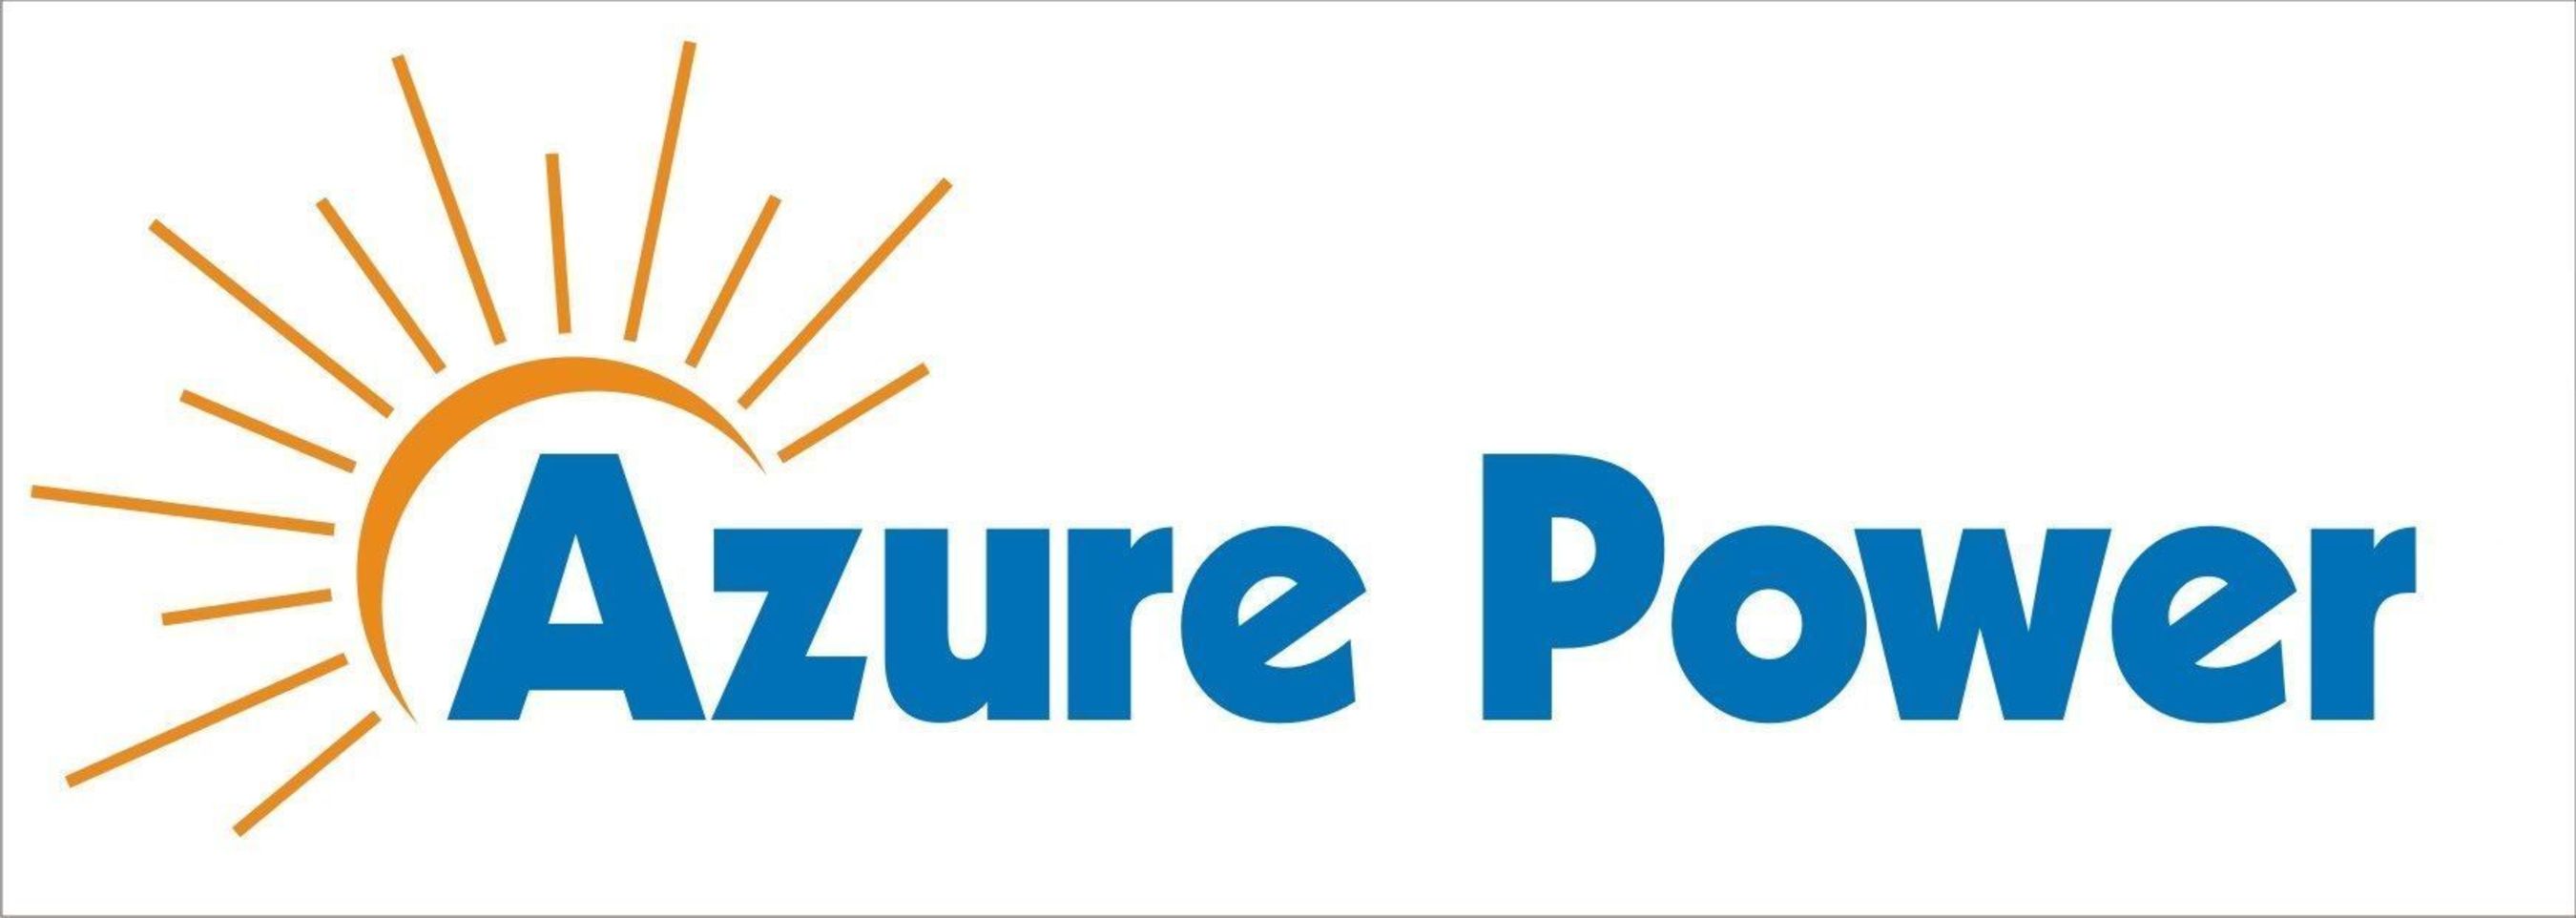 Azure Power Logo (PRNewsFoto/Azure Power)